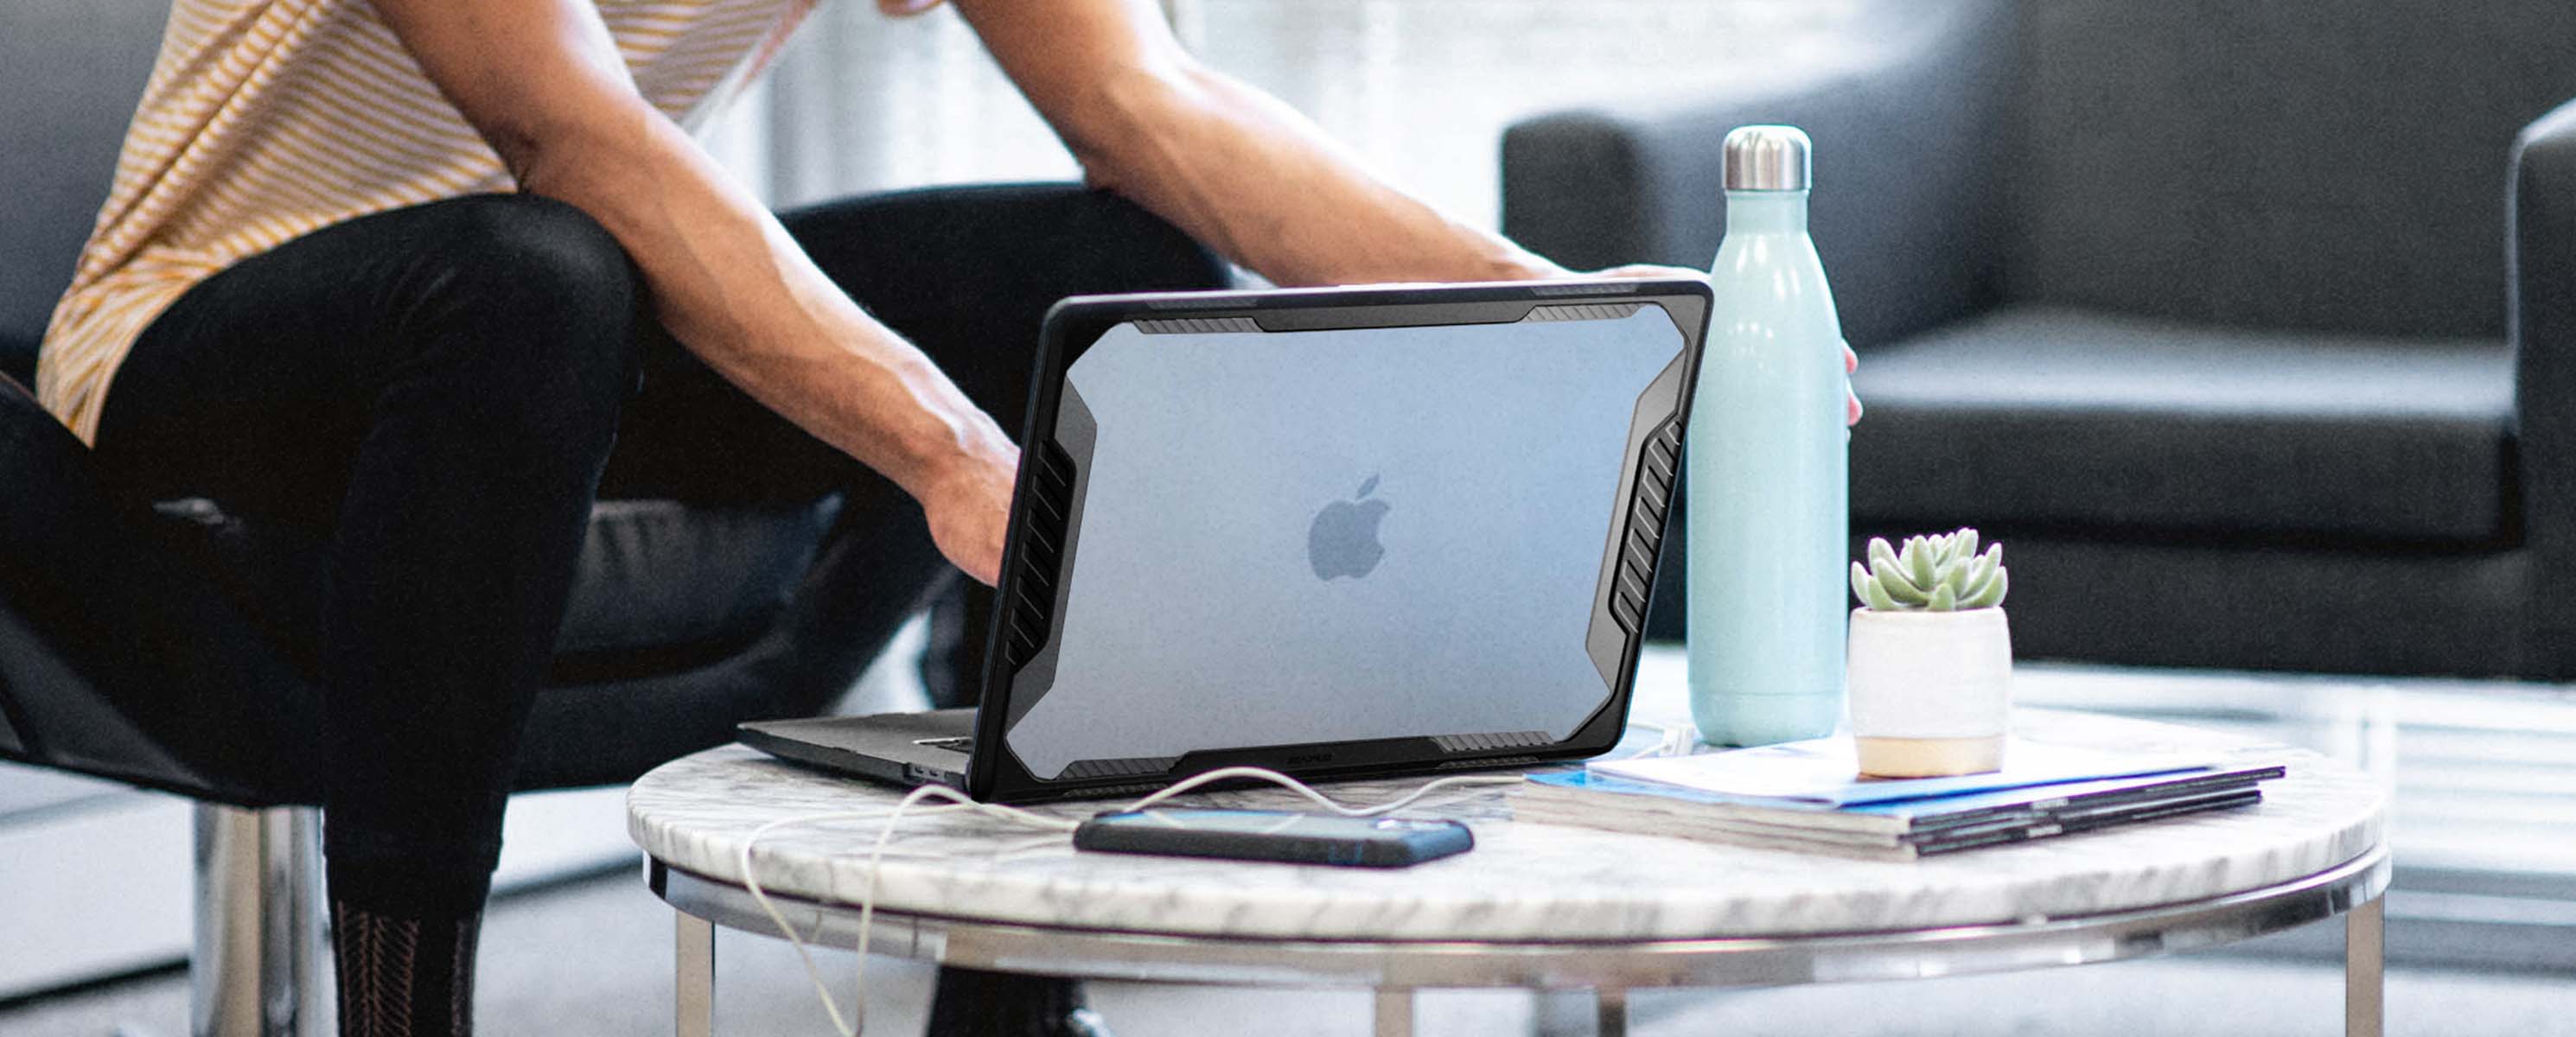 Coque Slim Fit protection durable pour Macbook Air 11